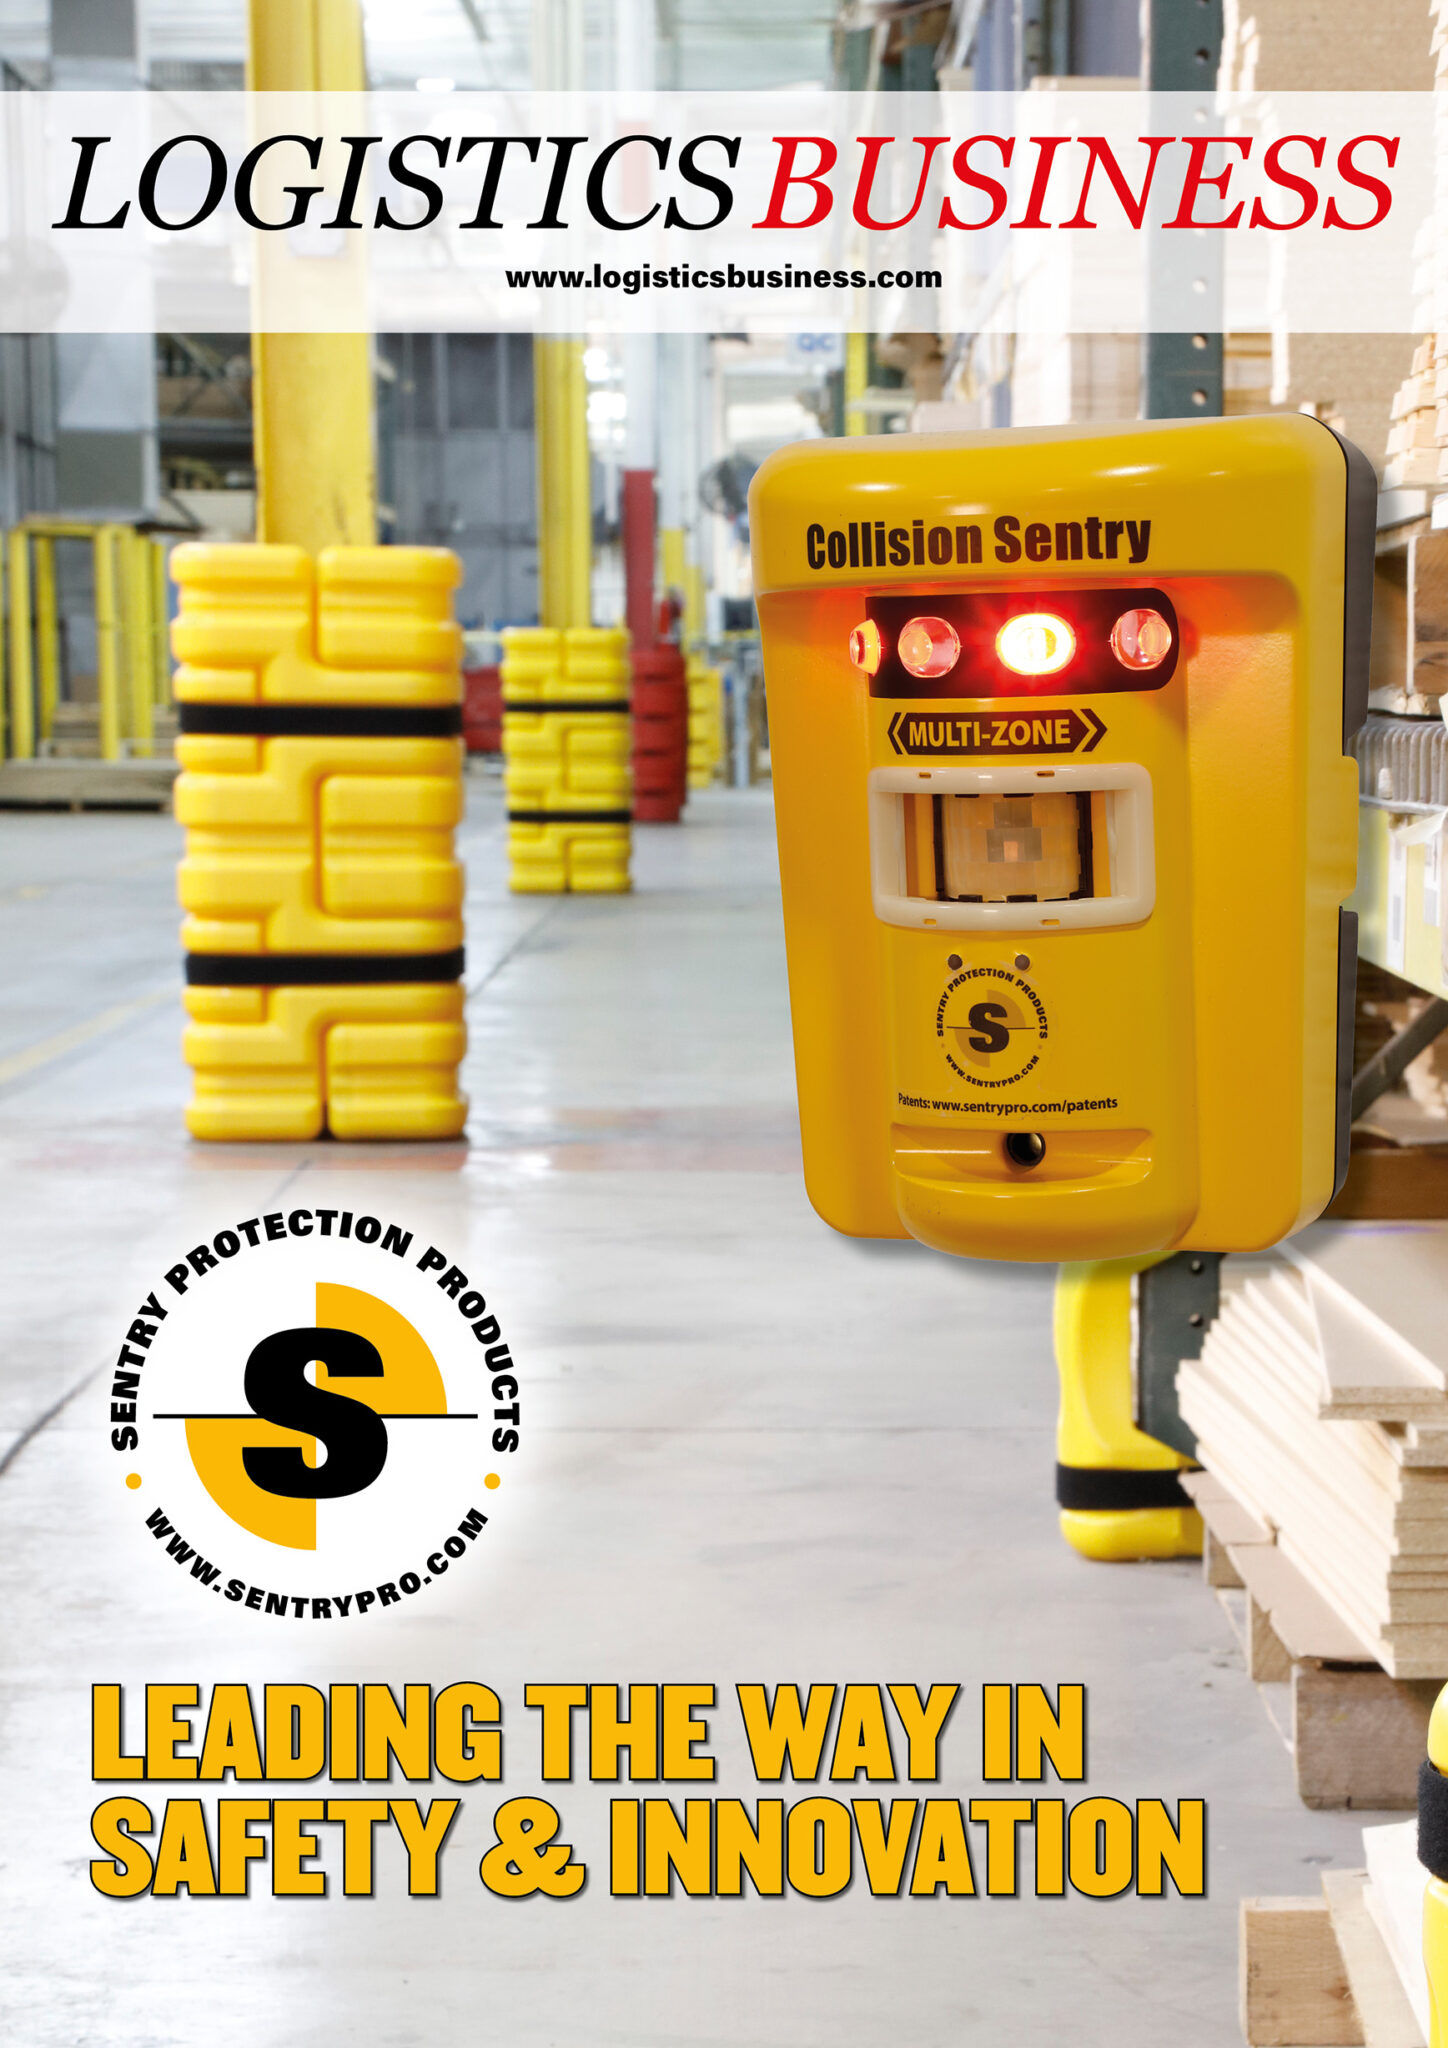 Warehouse Safety & Innovation